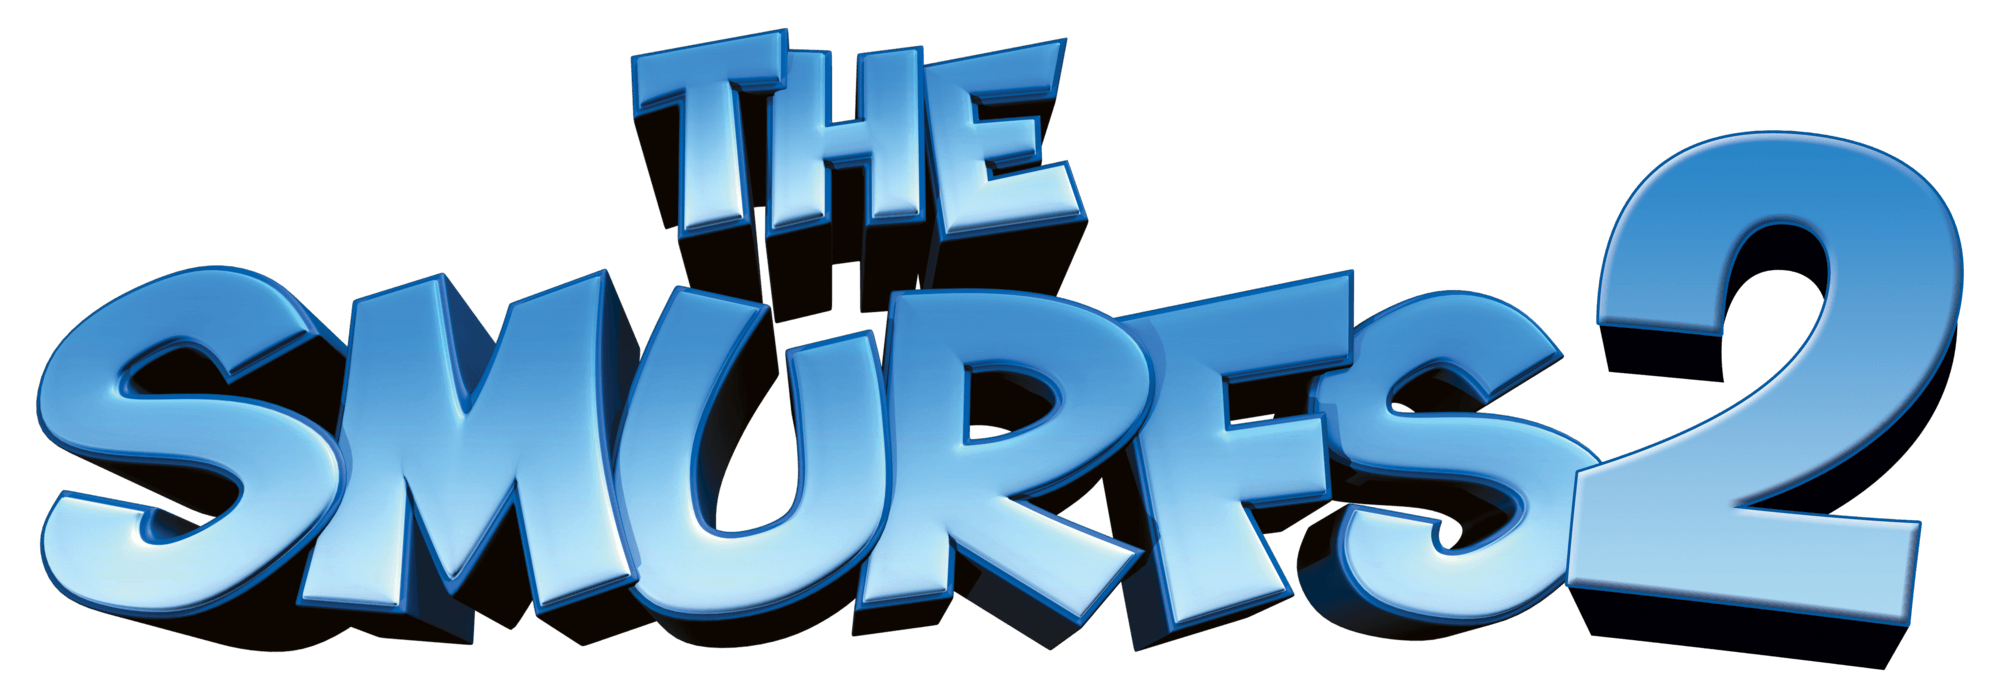 Smurfs Logo - The Smurfs 2 | Logopedia | FANDOM powered by Wikia